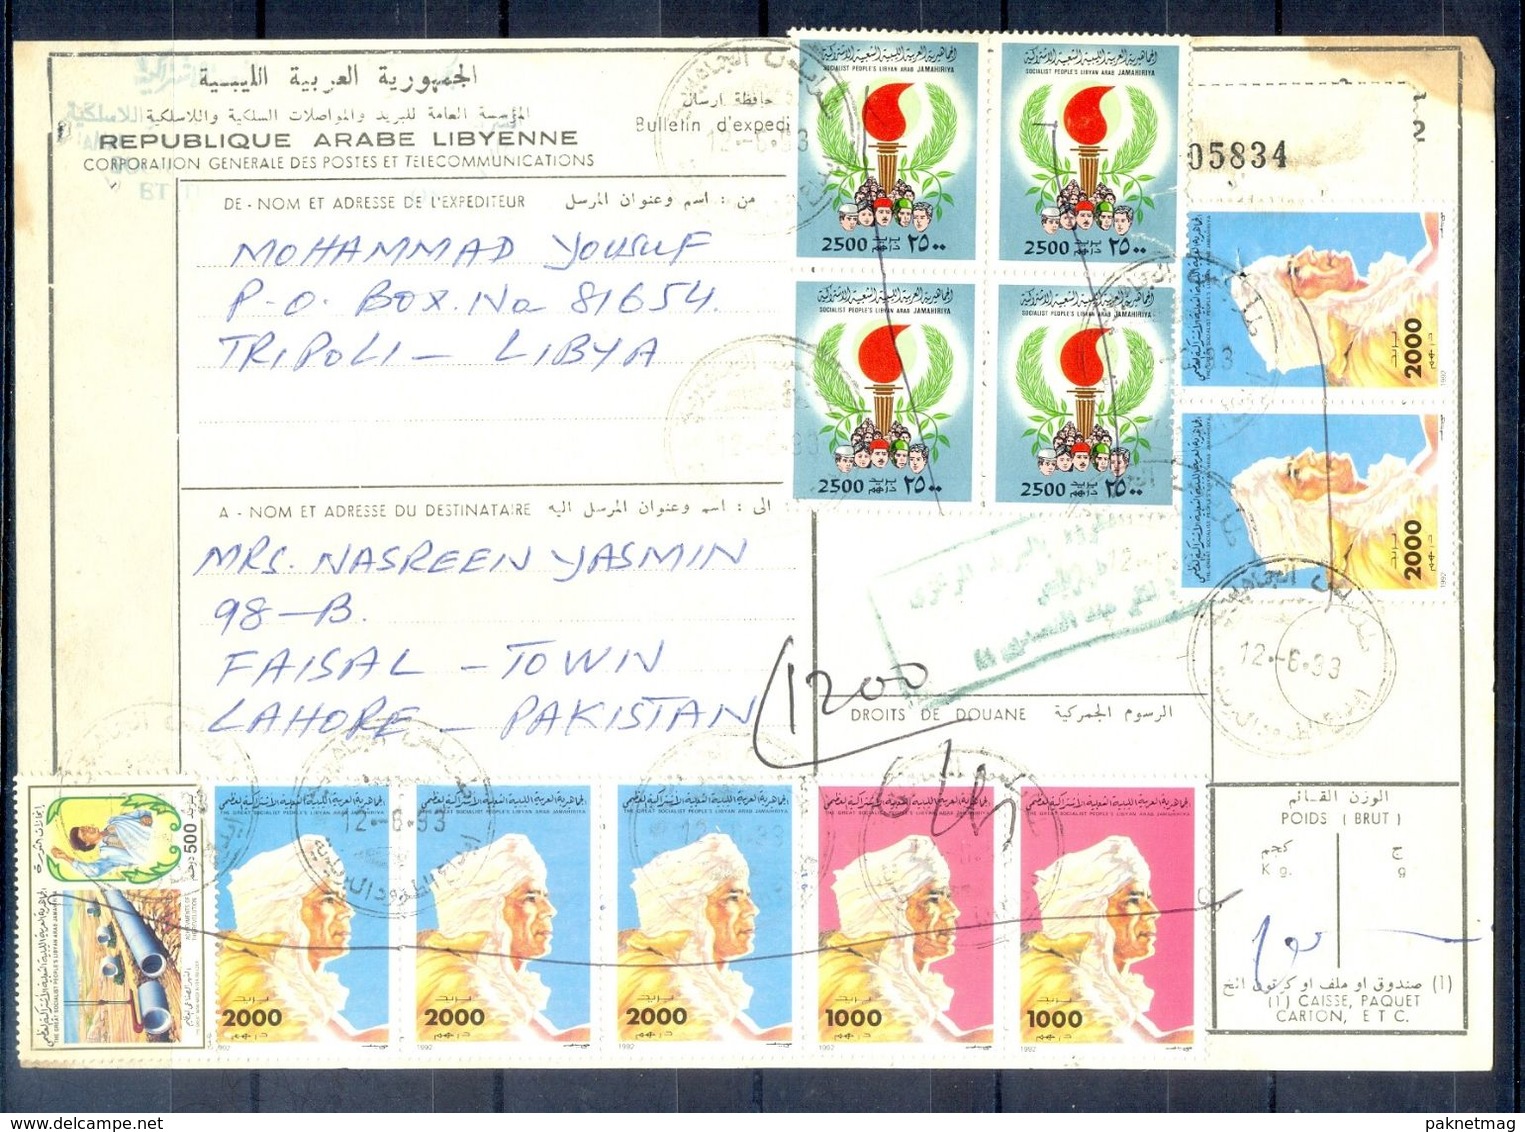 L111- Libya Parcel Receipt Cover Send To Pakistan. 1992 Definitive Col. Khadafy. 1979 Definitive Issue. - Libya